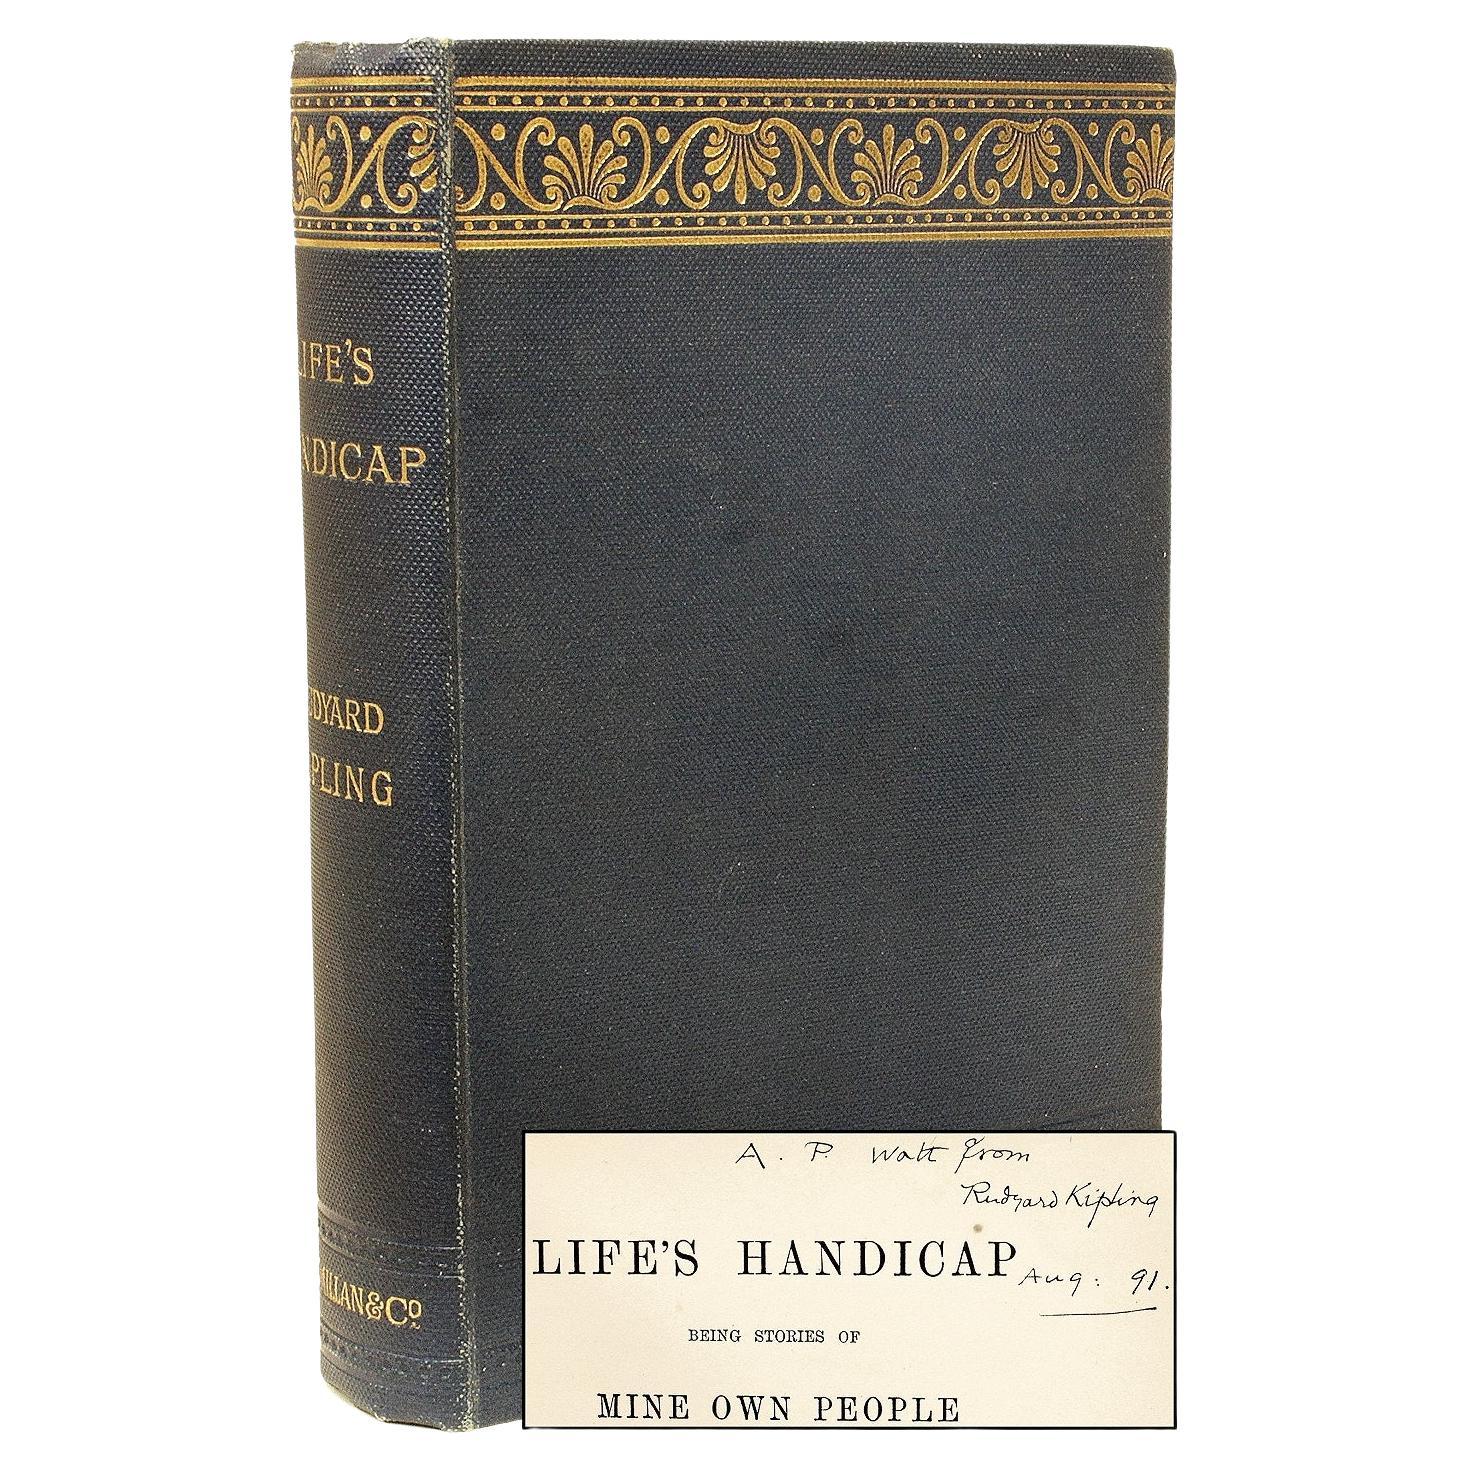 Rudyard KIPLING. Life's Handicap. 1891 - FIRST EDITION - PRESENTATION COPY!